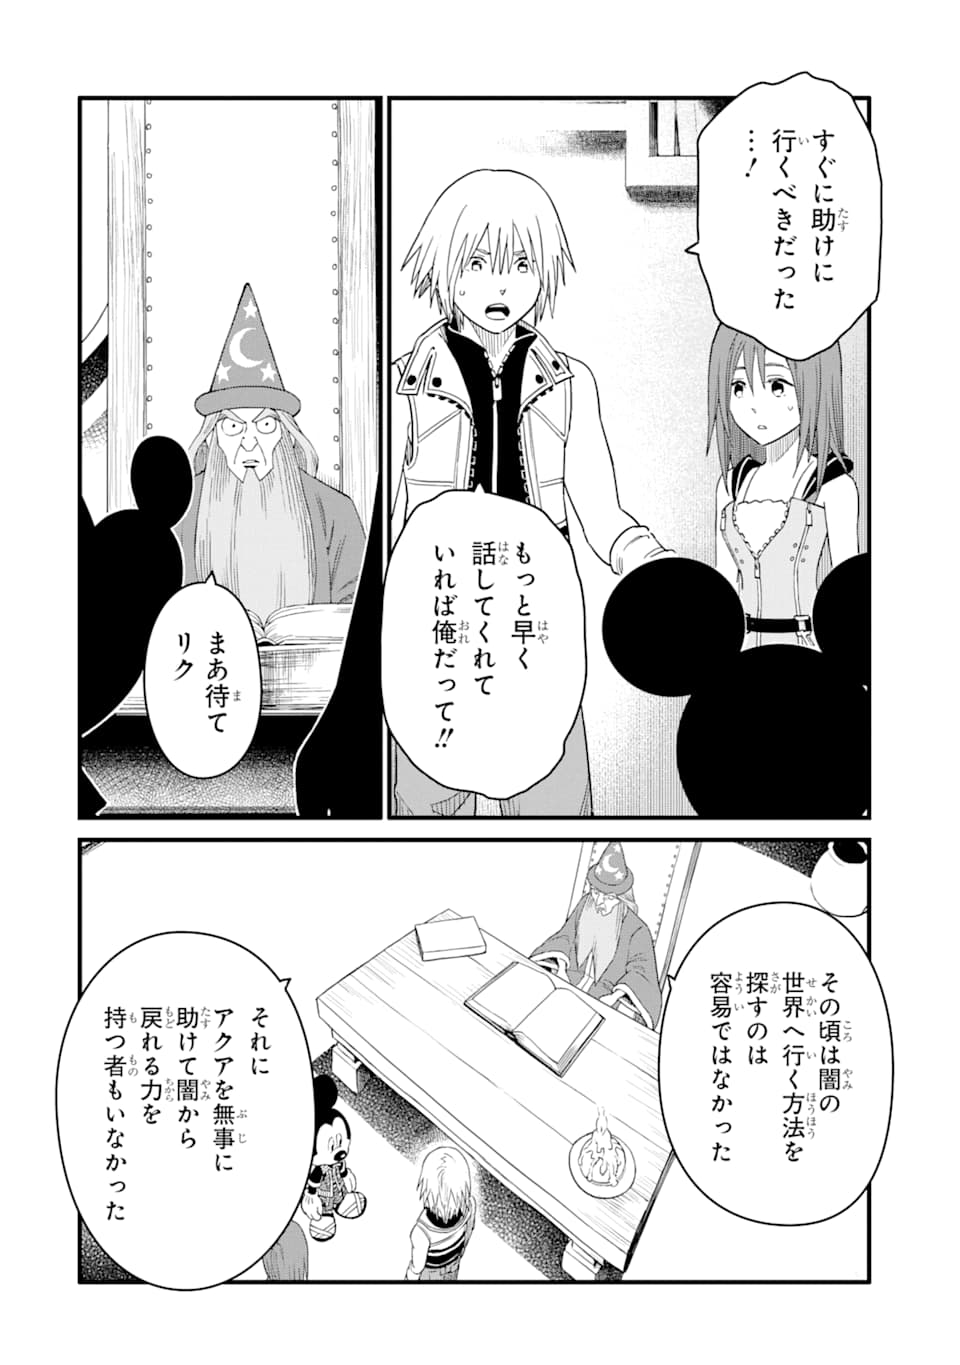 Kingdom Hearts III - Chapter 16 - Page 2